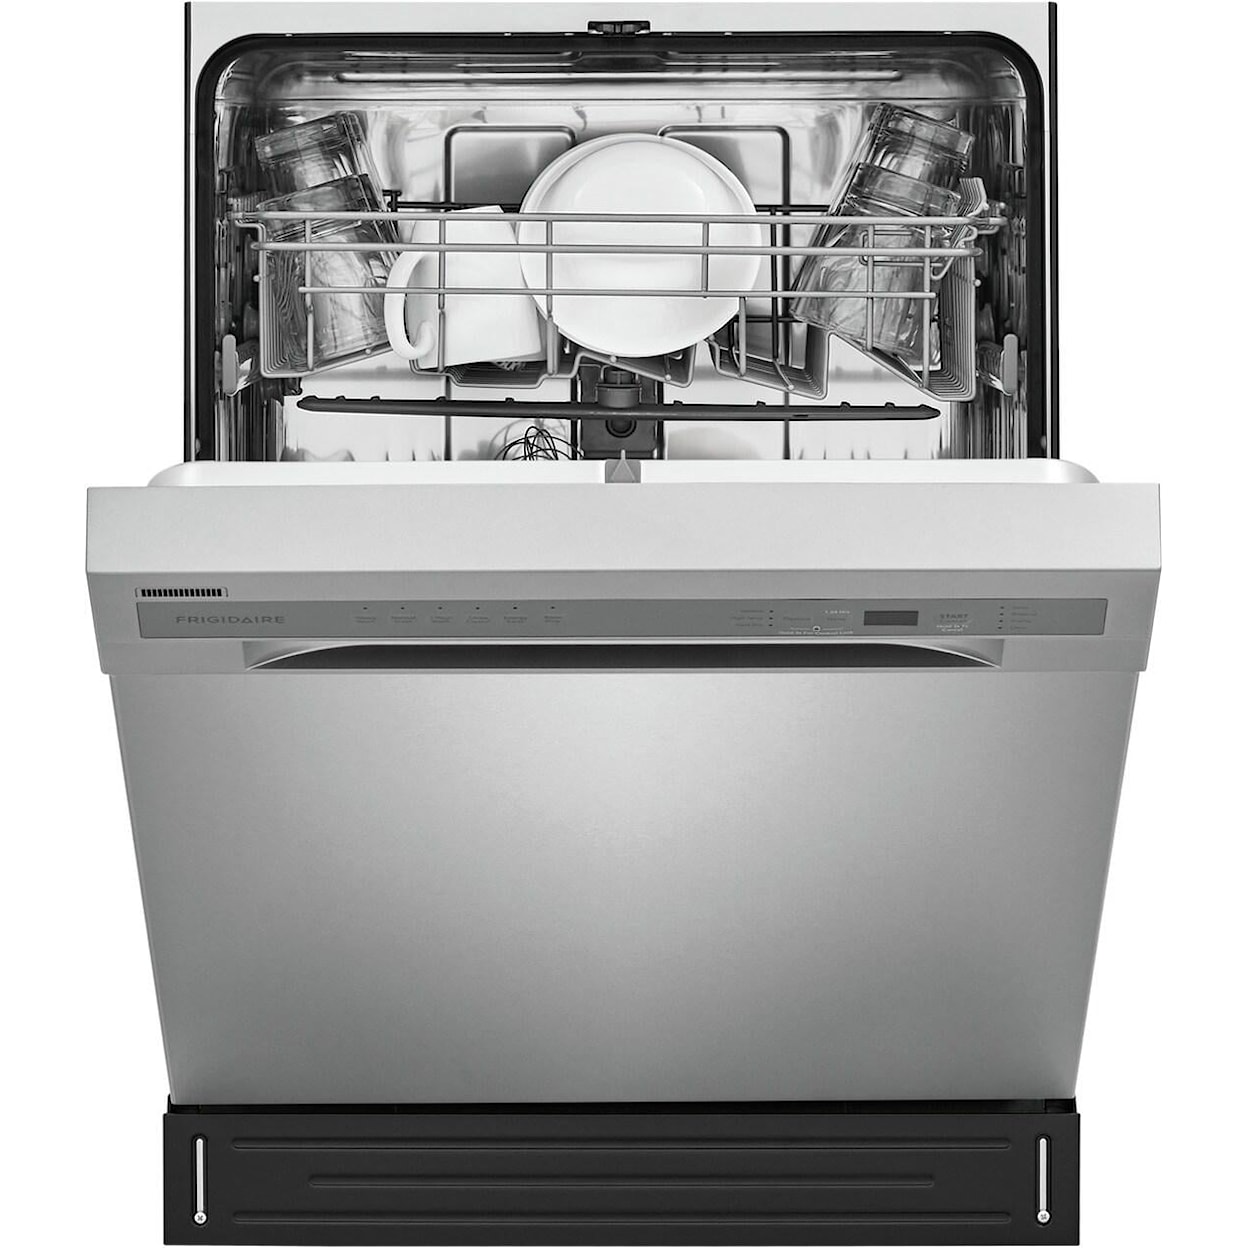 Frigidaire Dishwashers Built In Dishwasher - Stainless